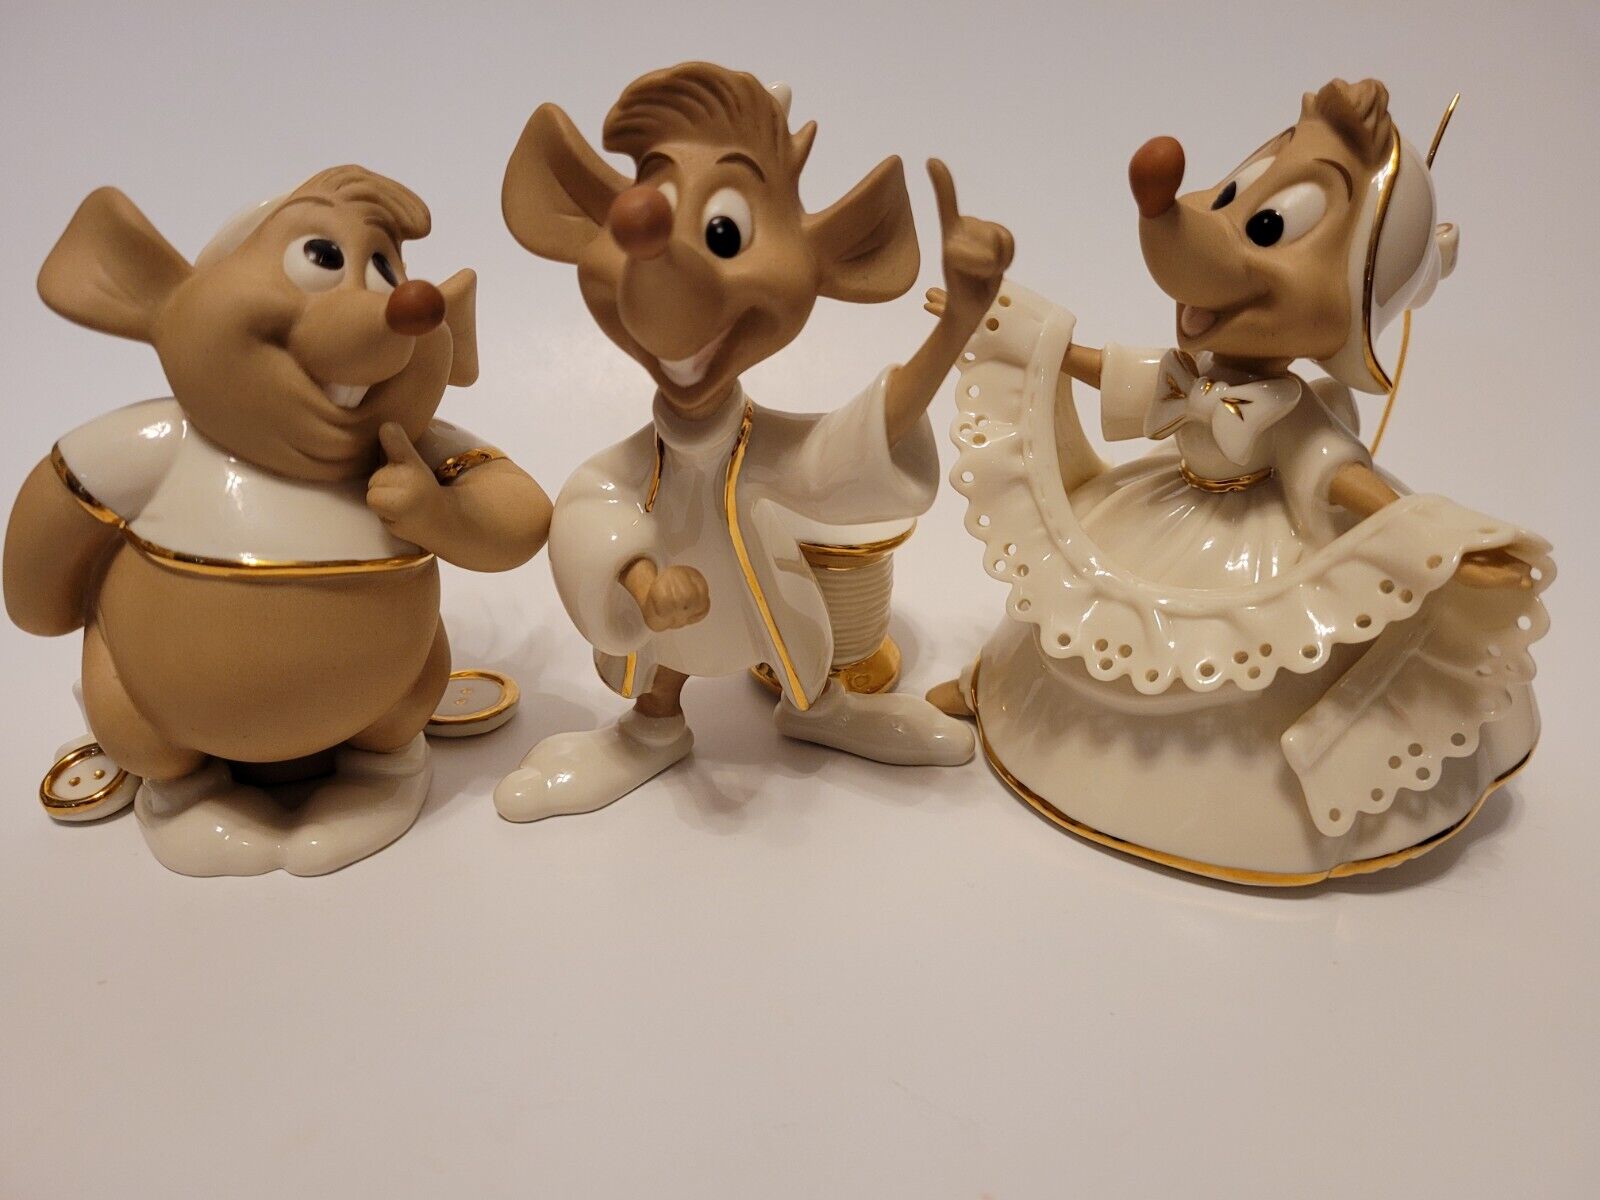 Disney's Mice from Cinderella by Lenox